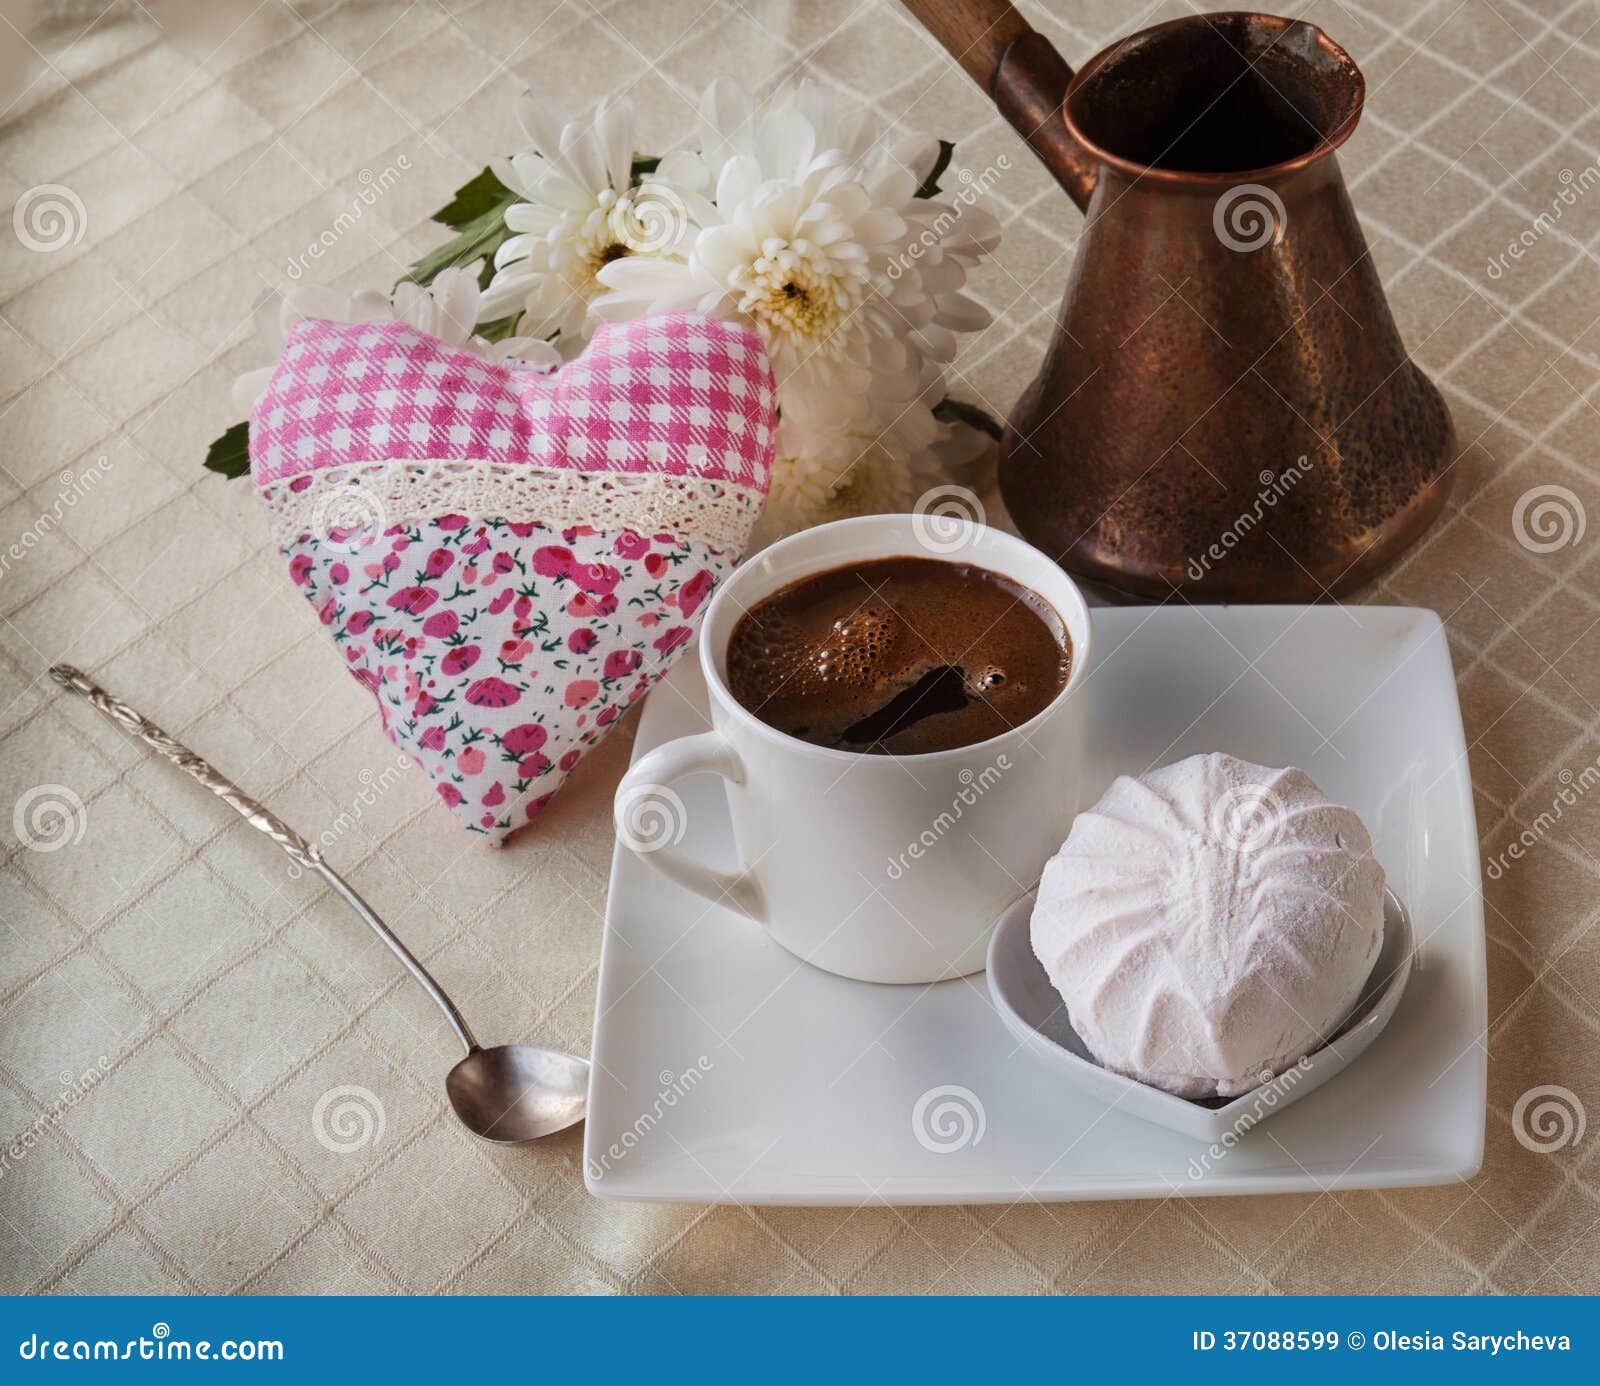 Romantic Morning with Coffee. Stock Image - Image of indulgence ...